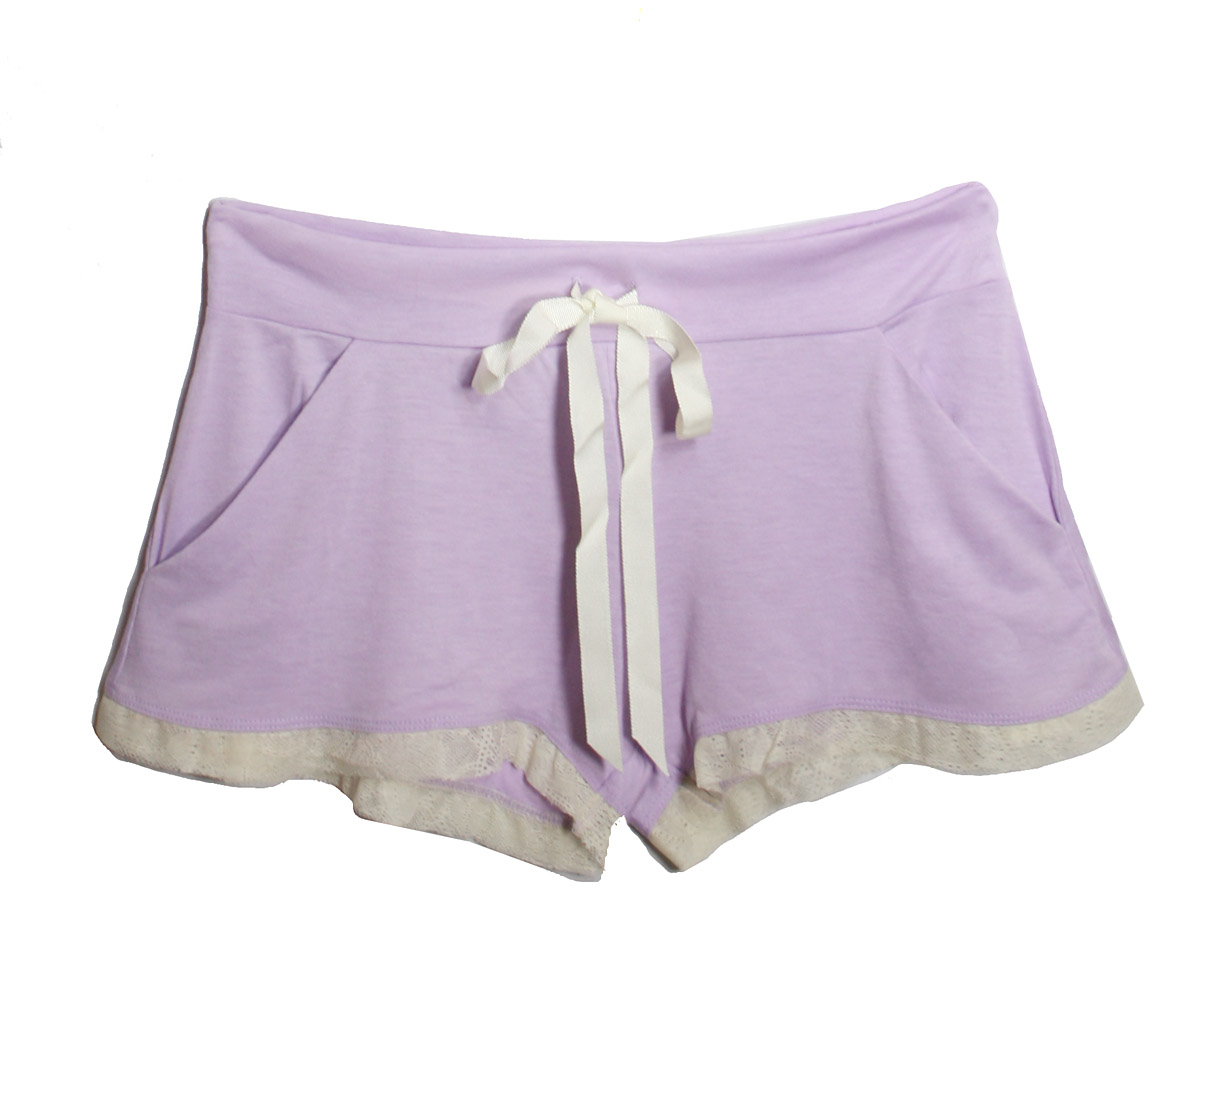  Venus in Play Sleep Short in Lilac | Luxury Knit Nightwear | Between the Sheets Loungewear